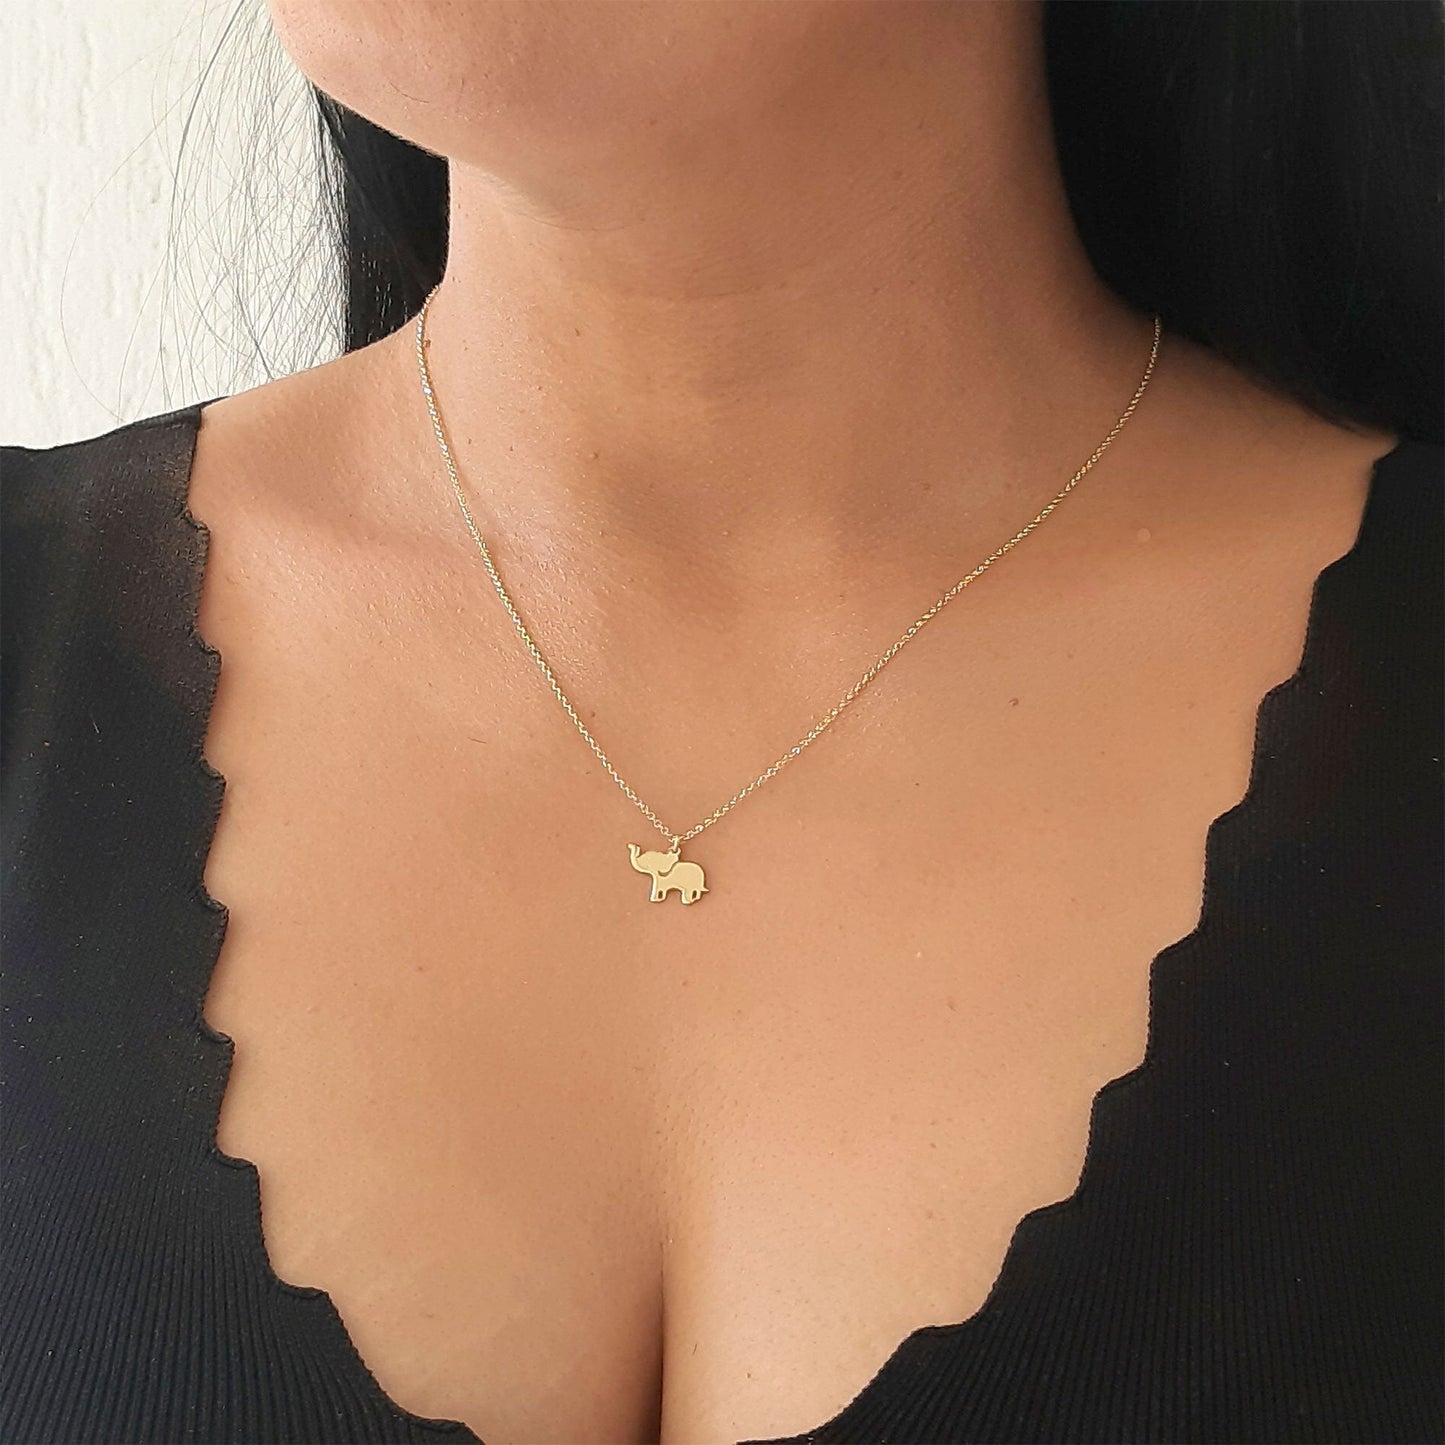 14k Solid Gold elephant pendant necklace